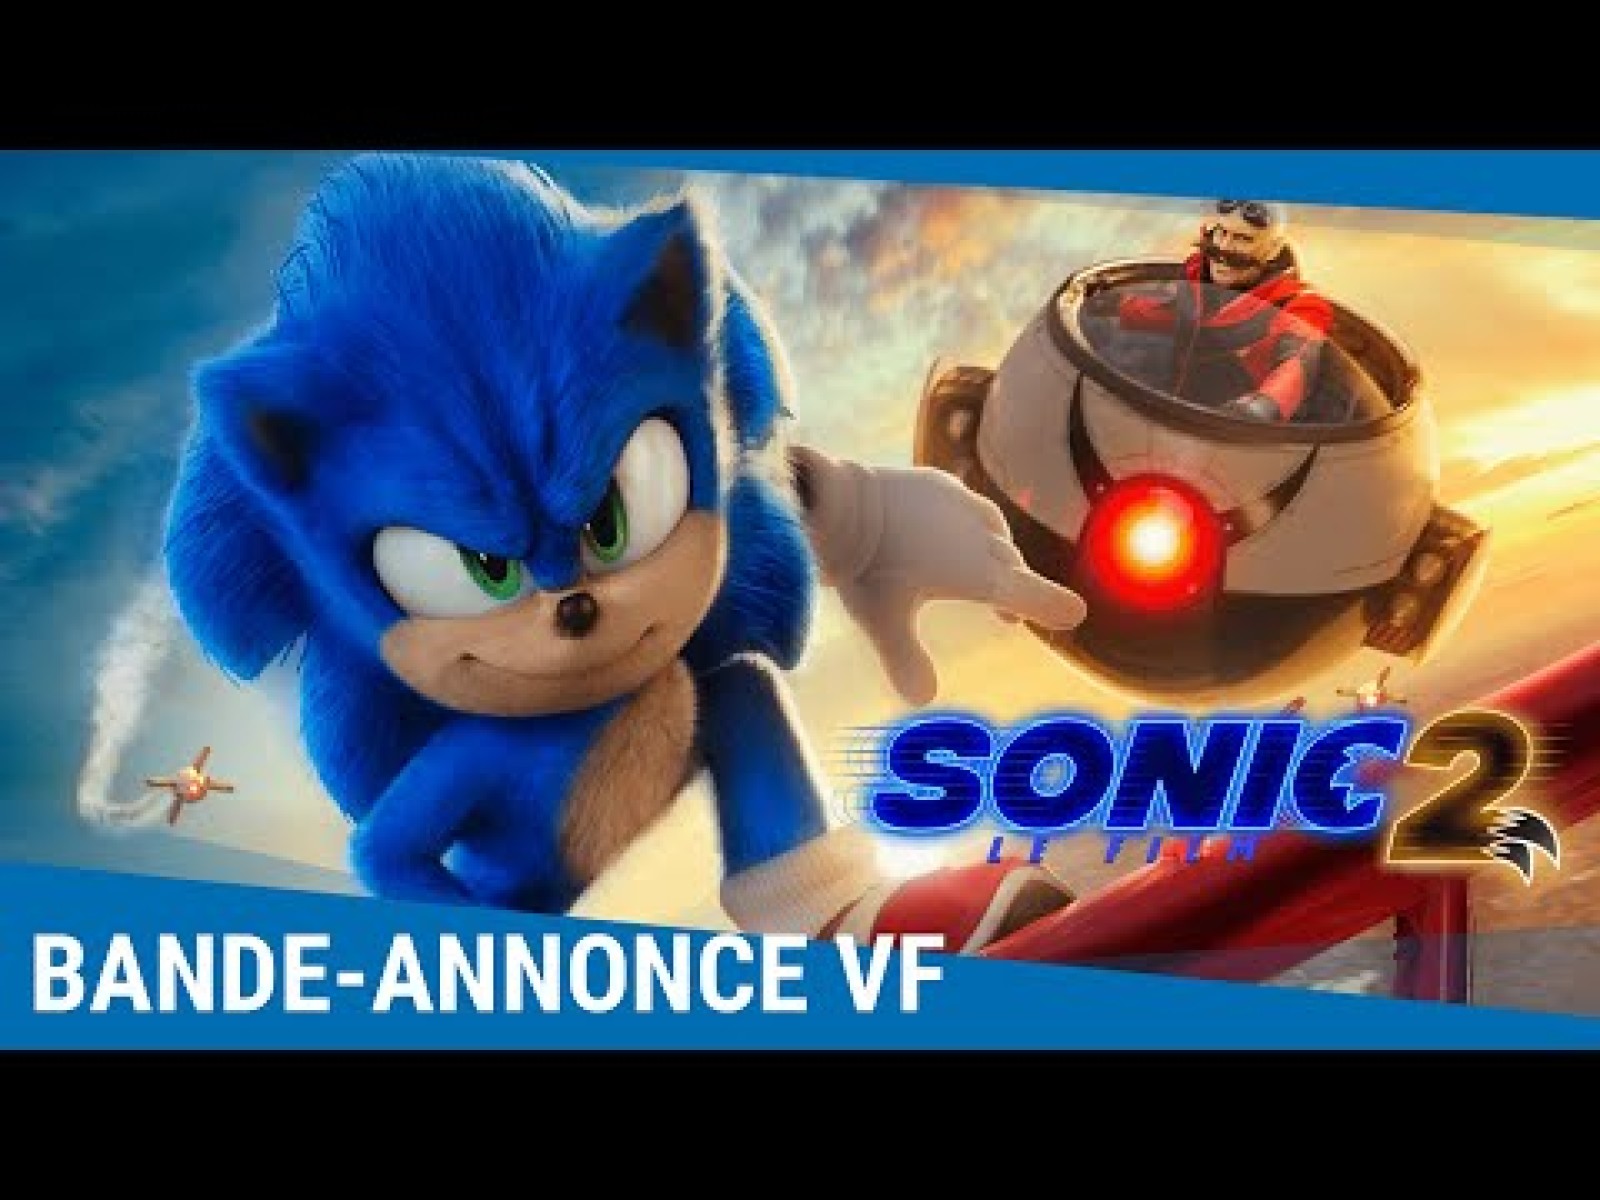 [VOIR] Sonic 2 le film streaming VF 2022 Complet Gratuit